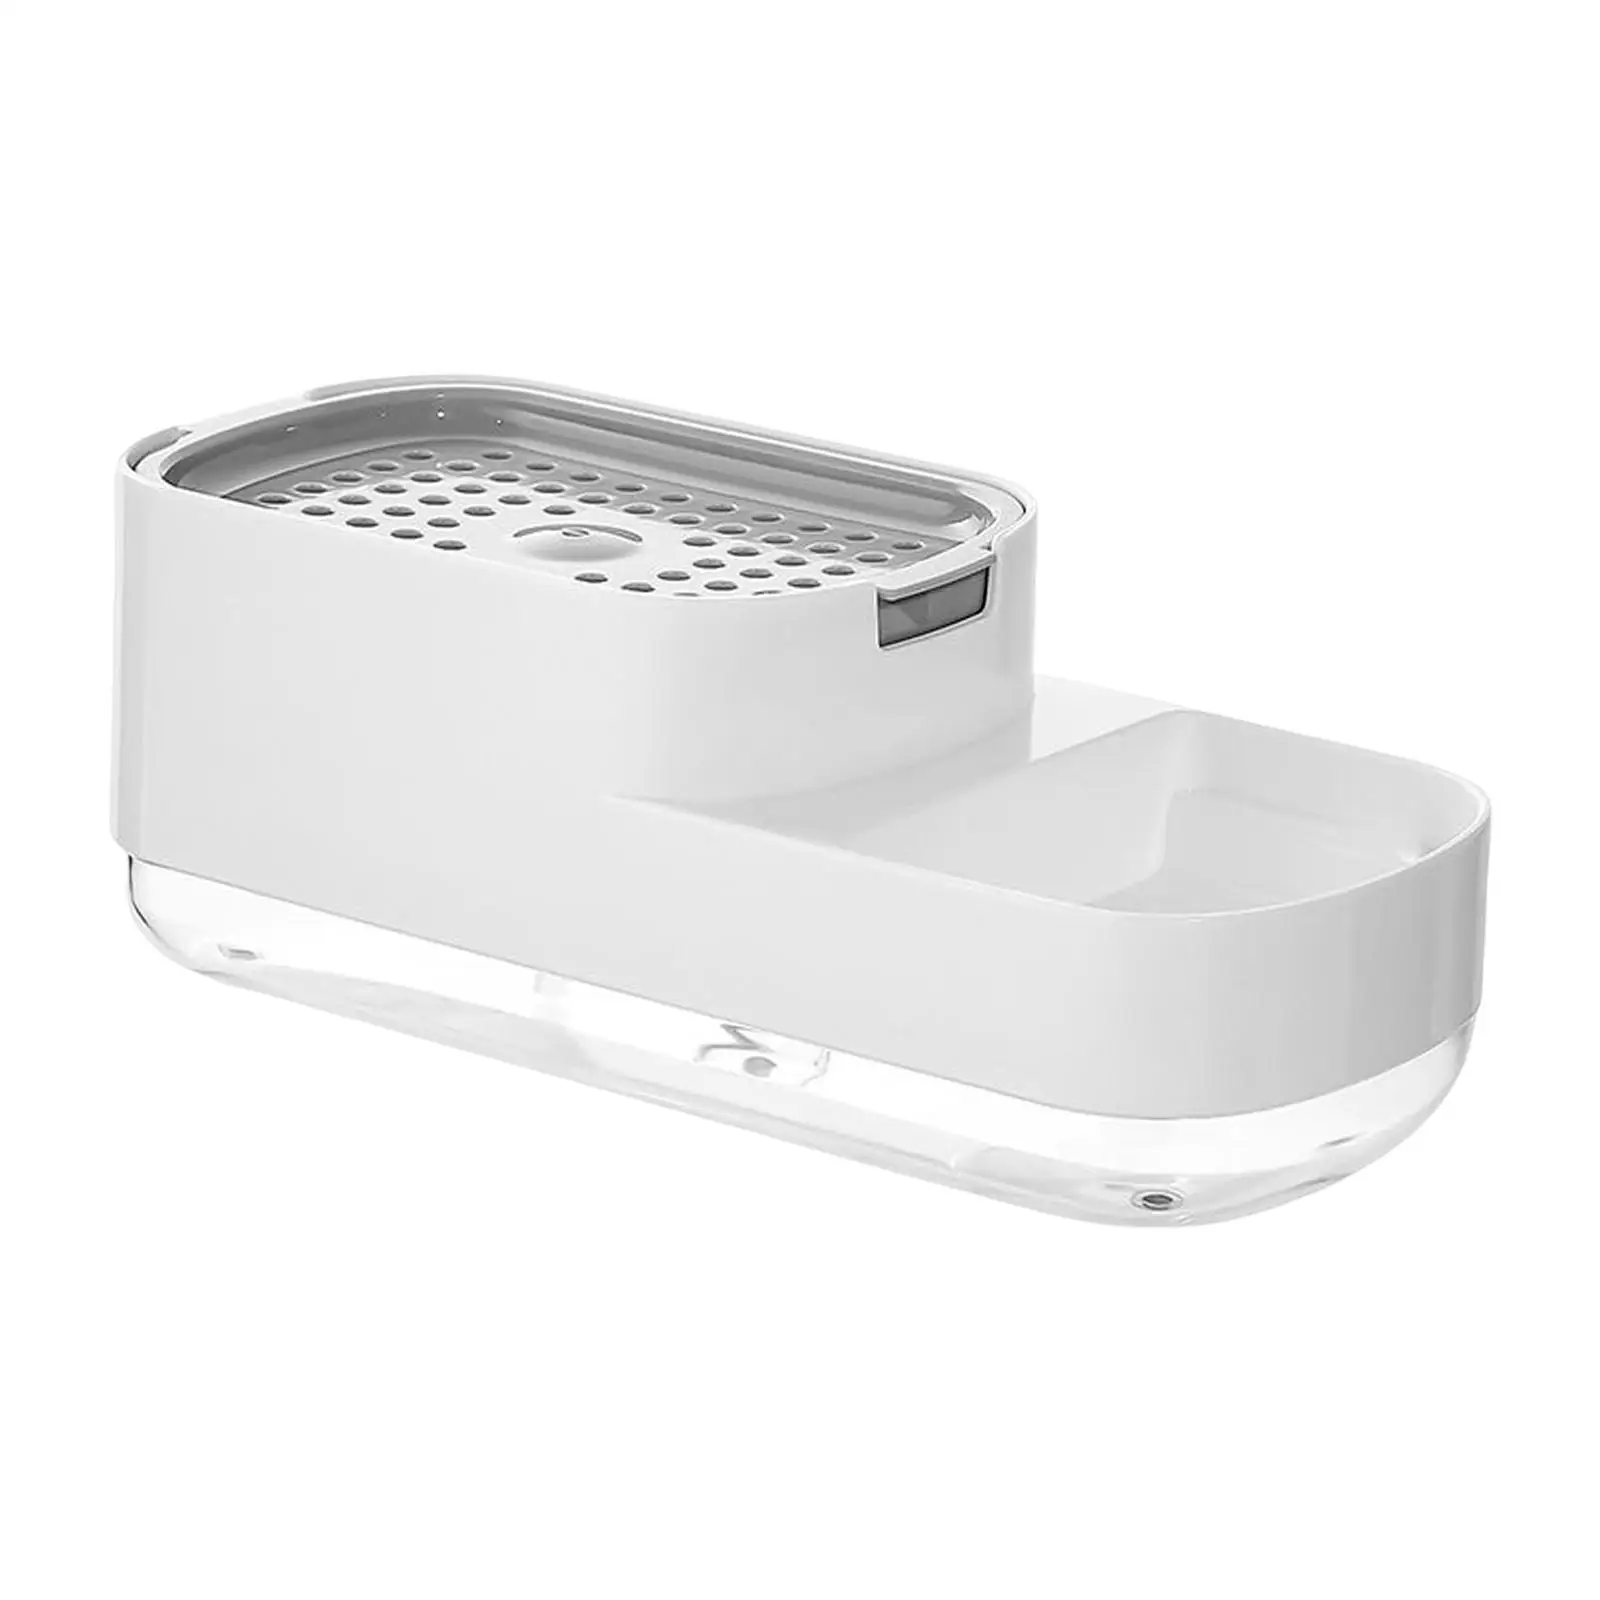 Soap Pump Dispenser Draining Tray Caddy Organizer for Bathroom Kitchen